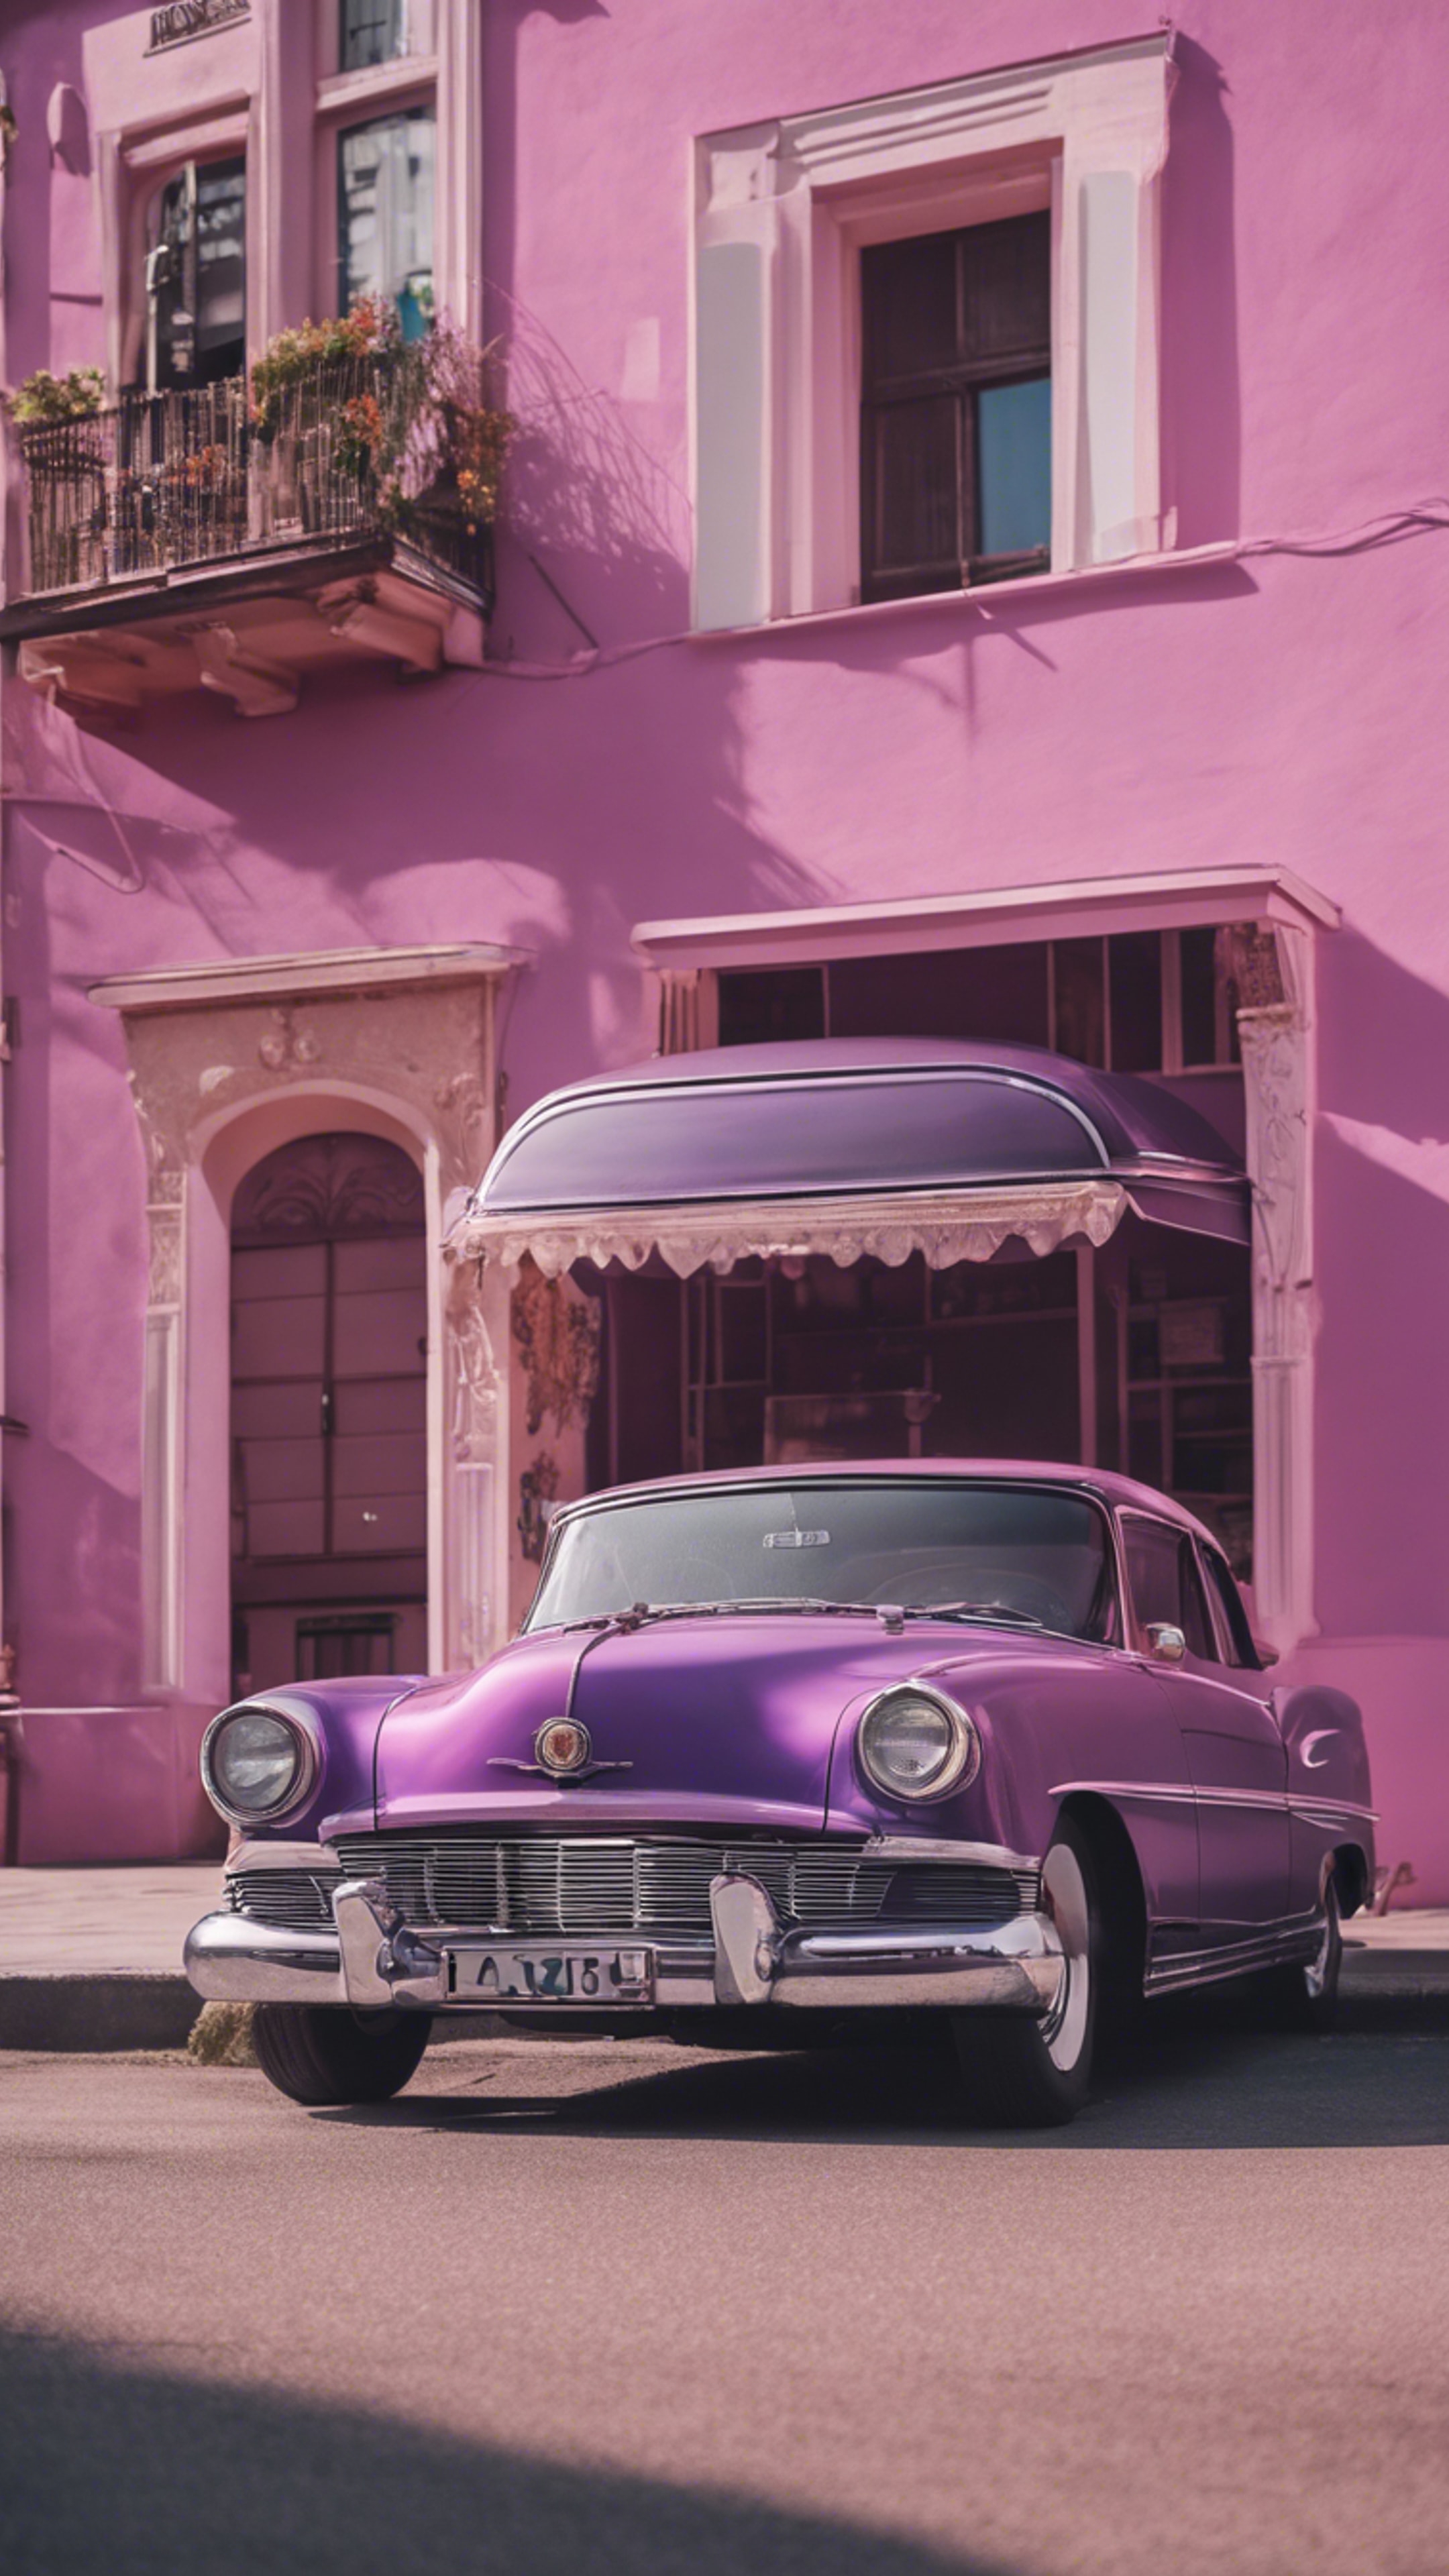 A purple vintage car parked by a pink pastel building.壁紙[f1101ed4526e489a8b1f]